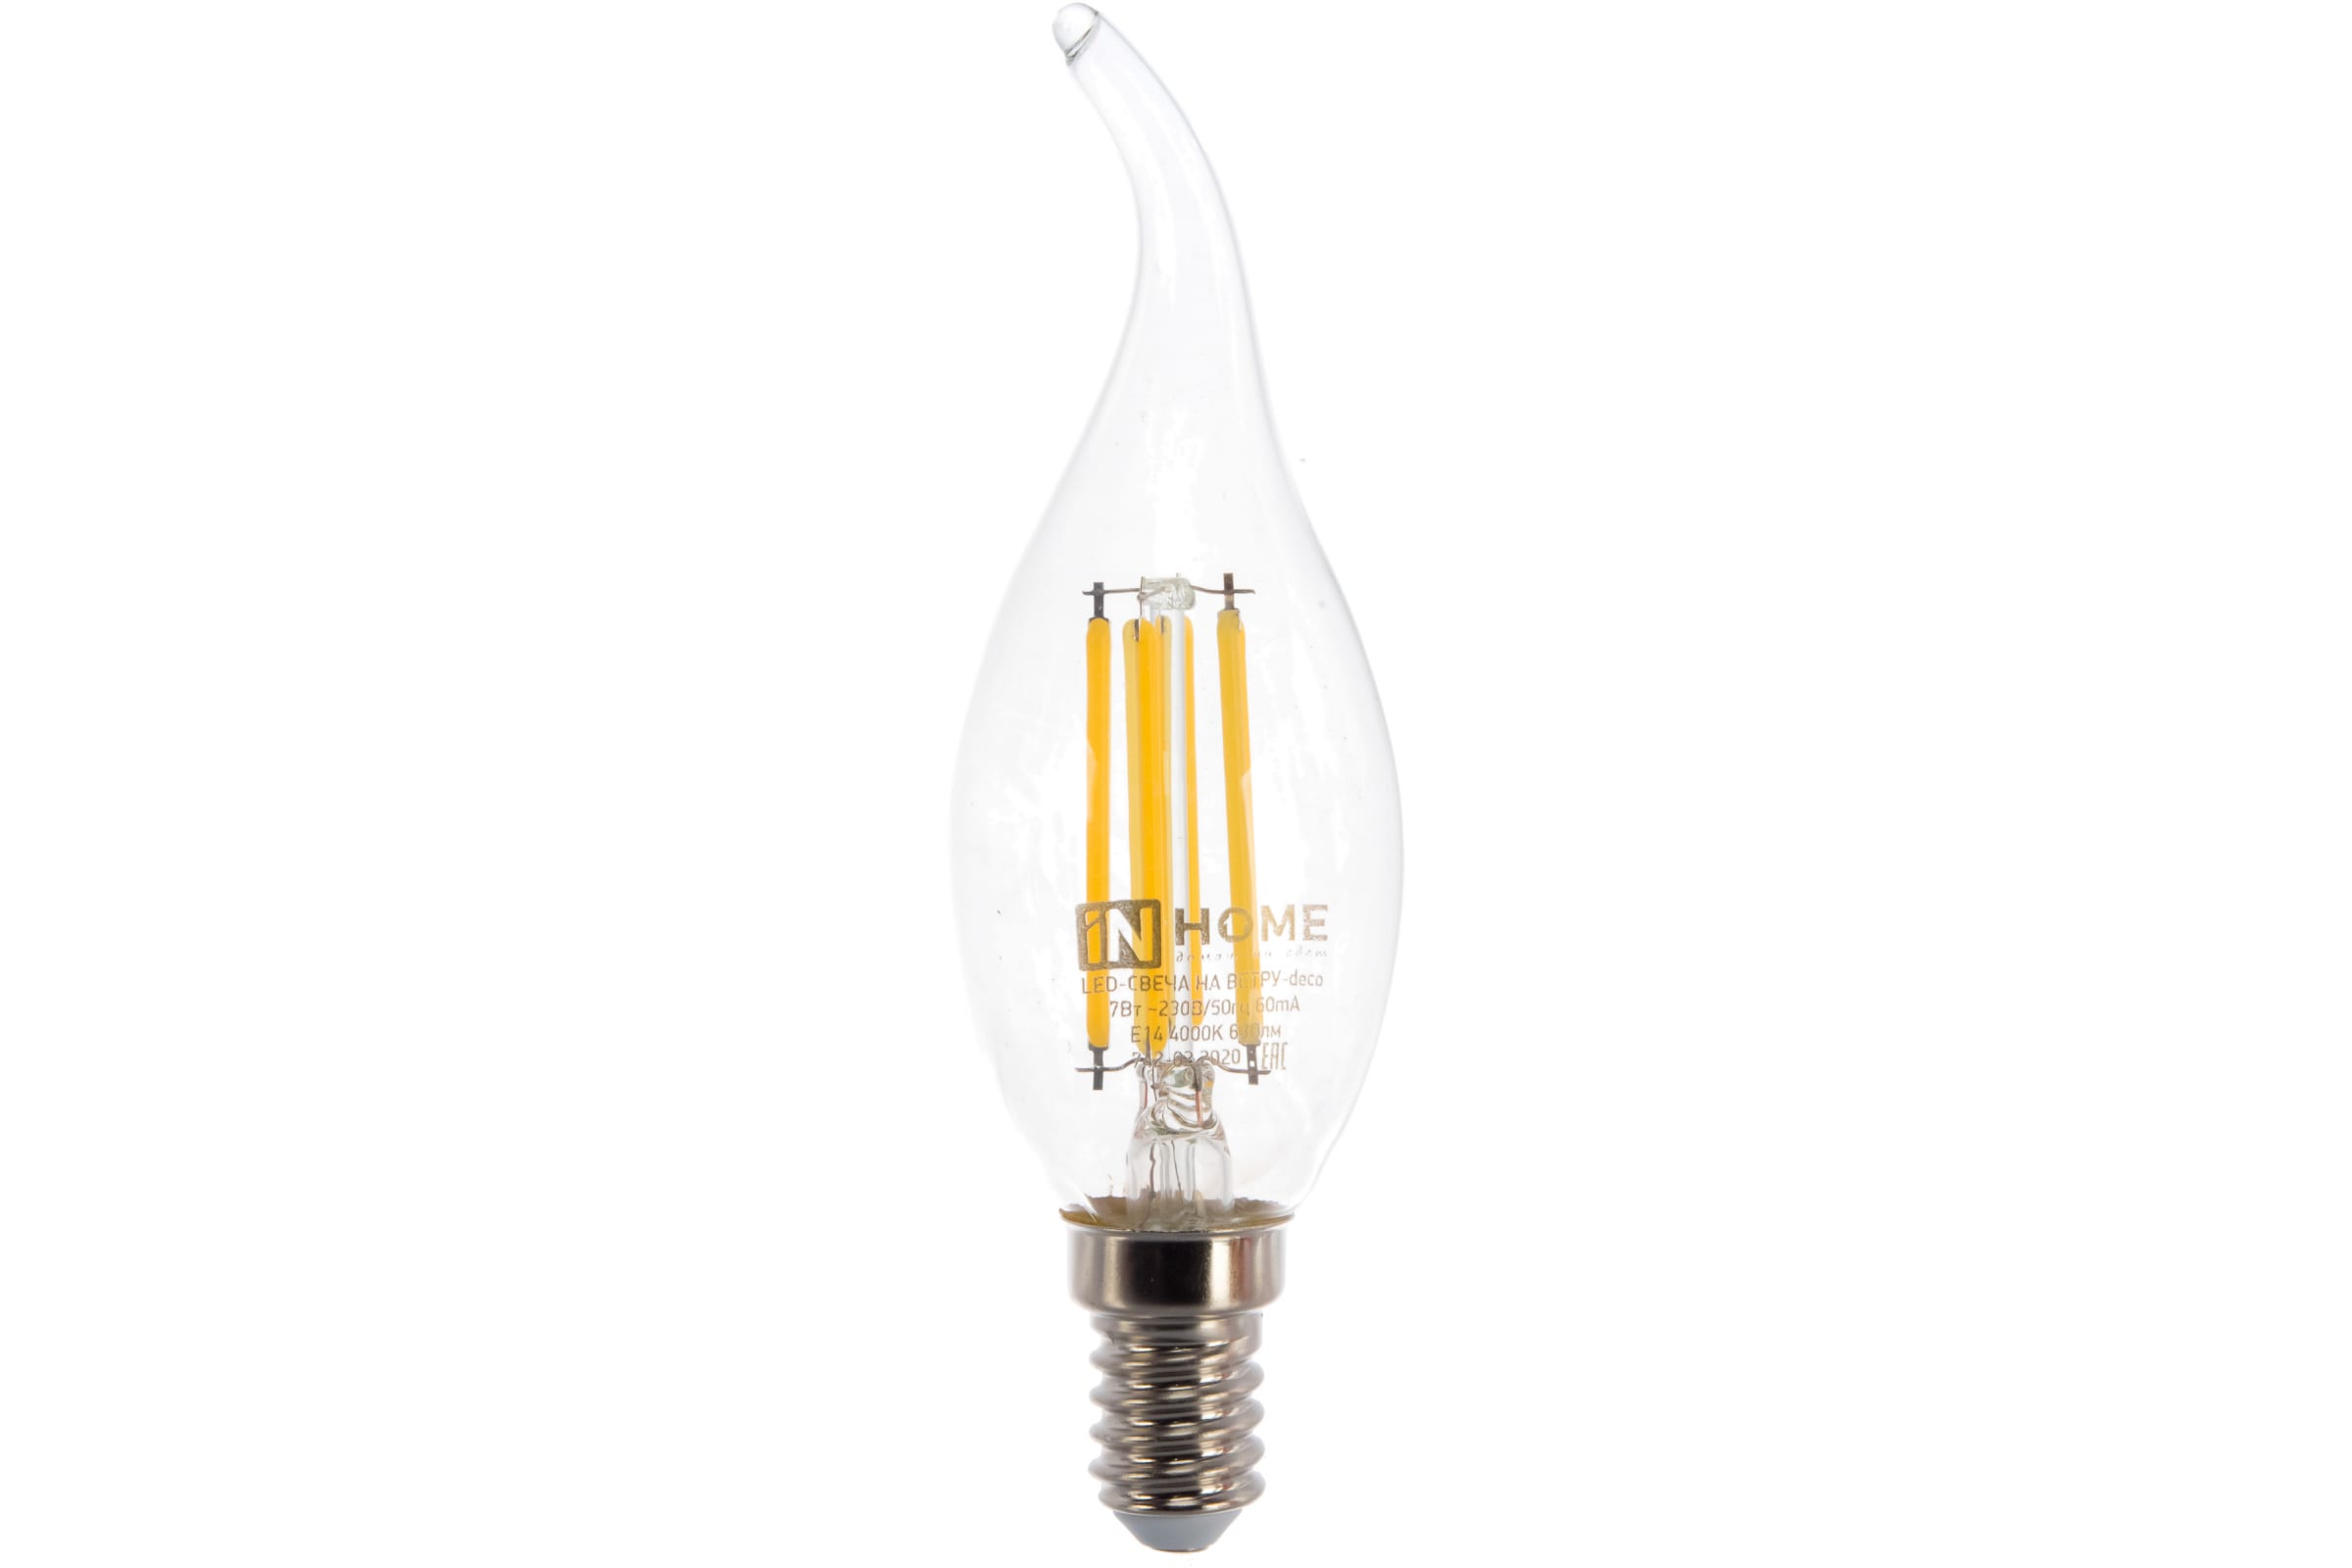 Лампа светодиодная LED-СВЕЧА НА ВЕТРУ-deco 7Вт 230В Е14 4000К 630Лм прозрачная IN HOME